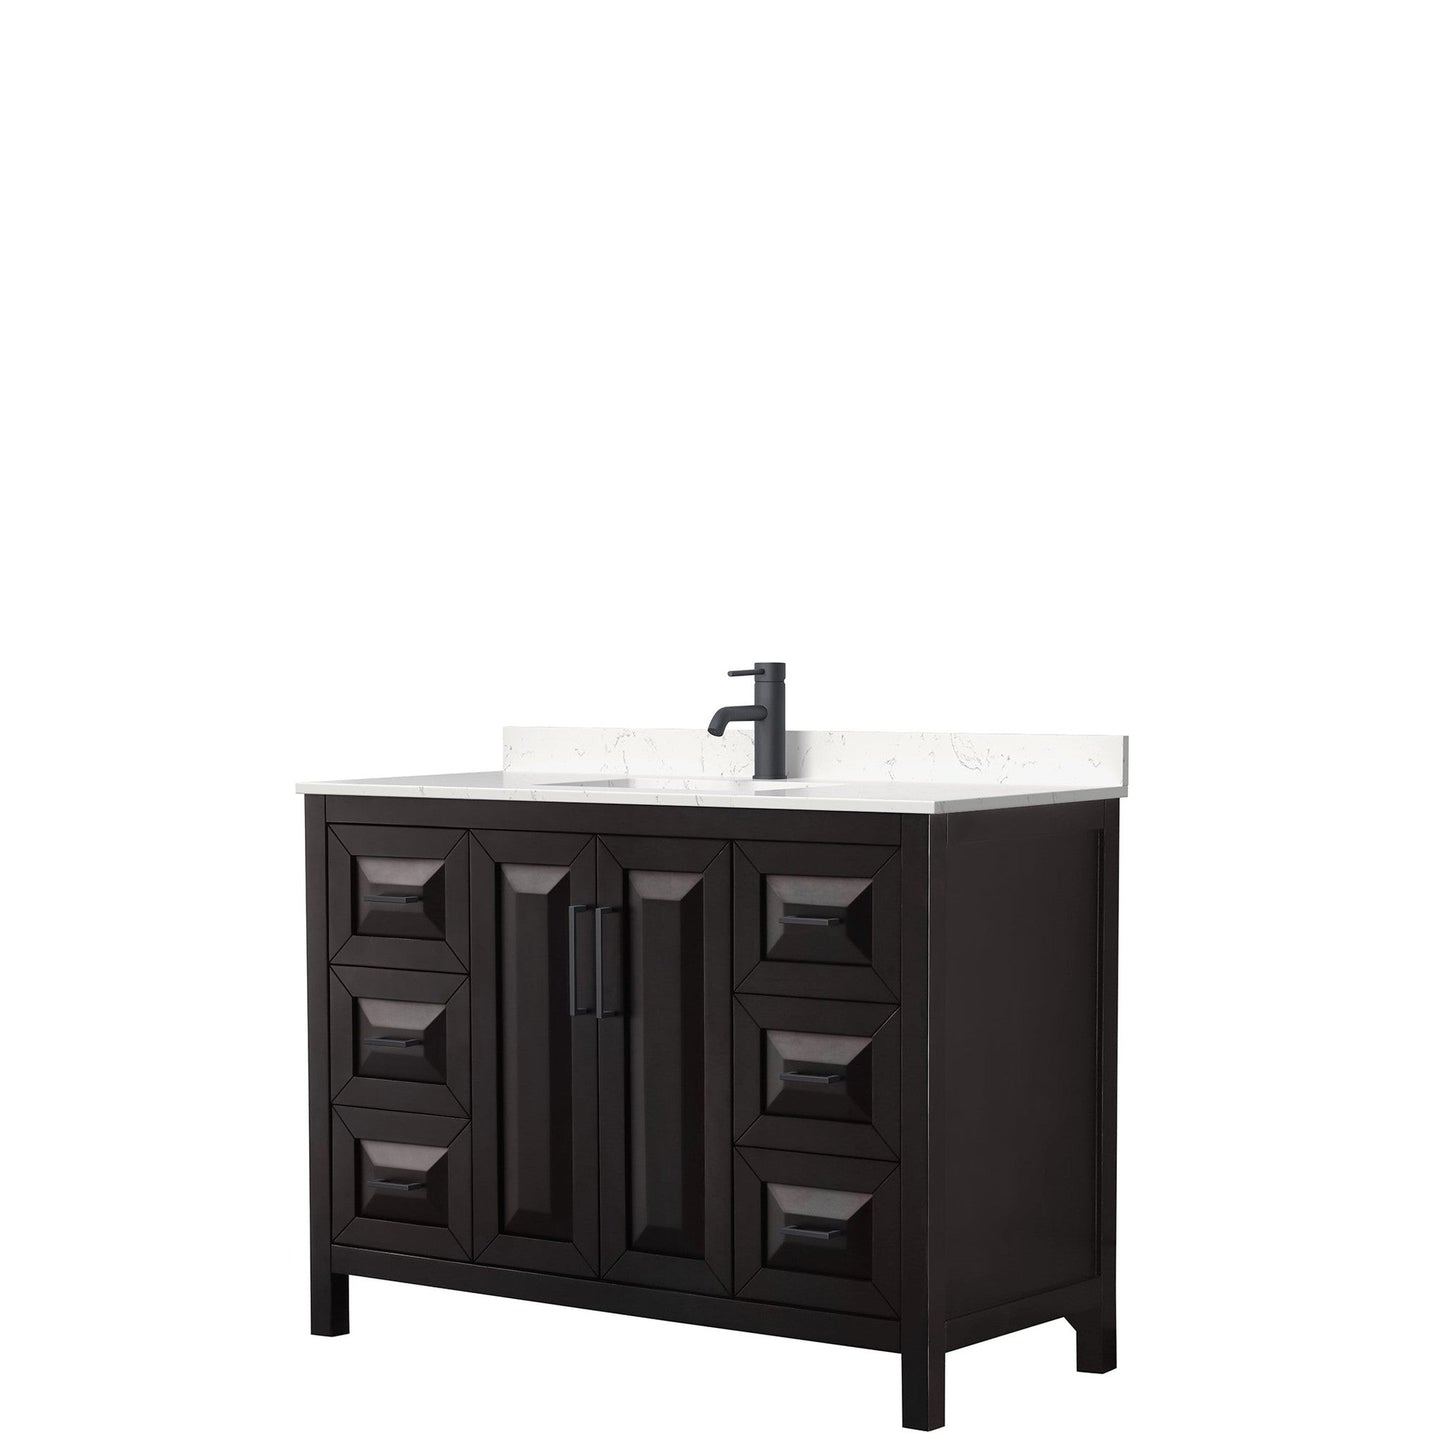 Daria 48" Single Bathroom Vanity in Dark Espresso, Carrara Cultured Marble Countertop, Undermount Square Sink, Matte Black Trim